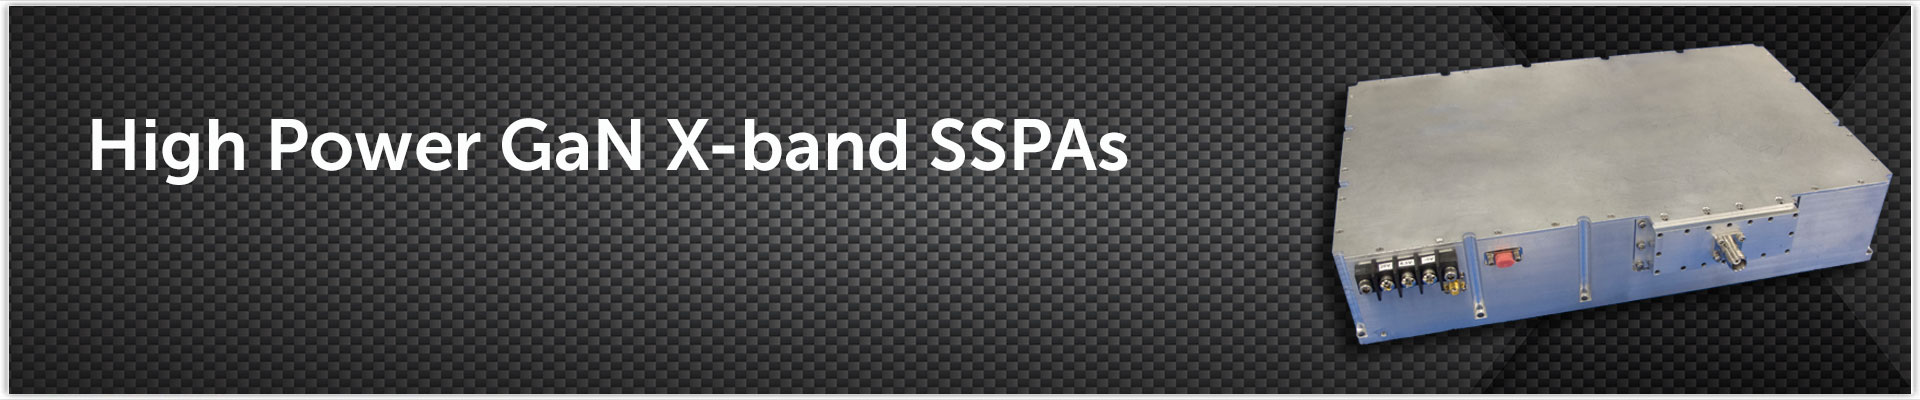 High-Power-GaN-X-band-SSPAs.jpg